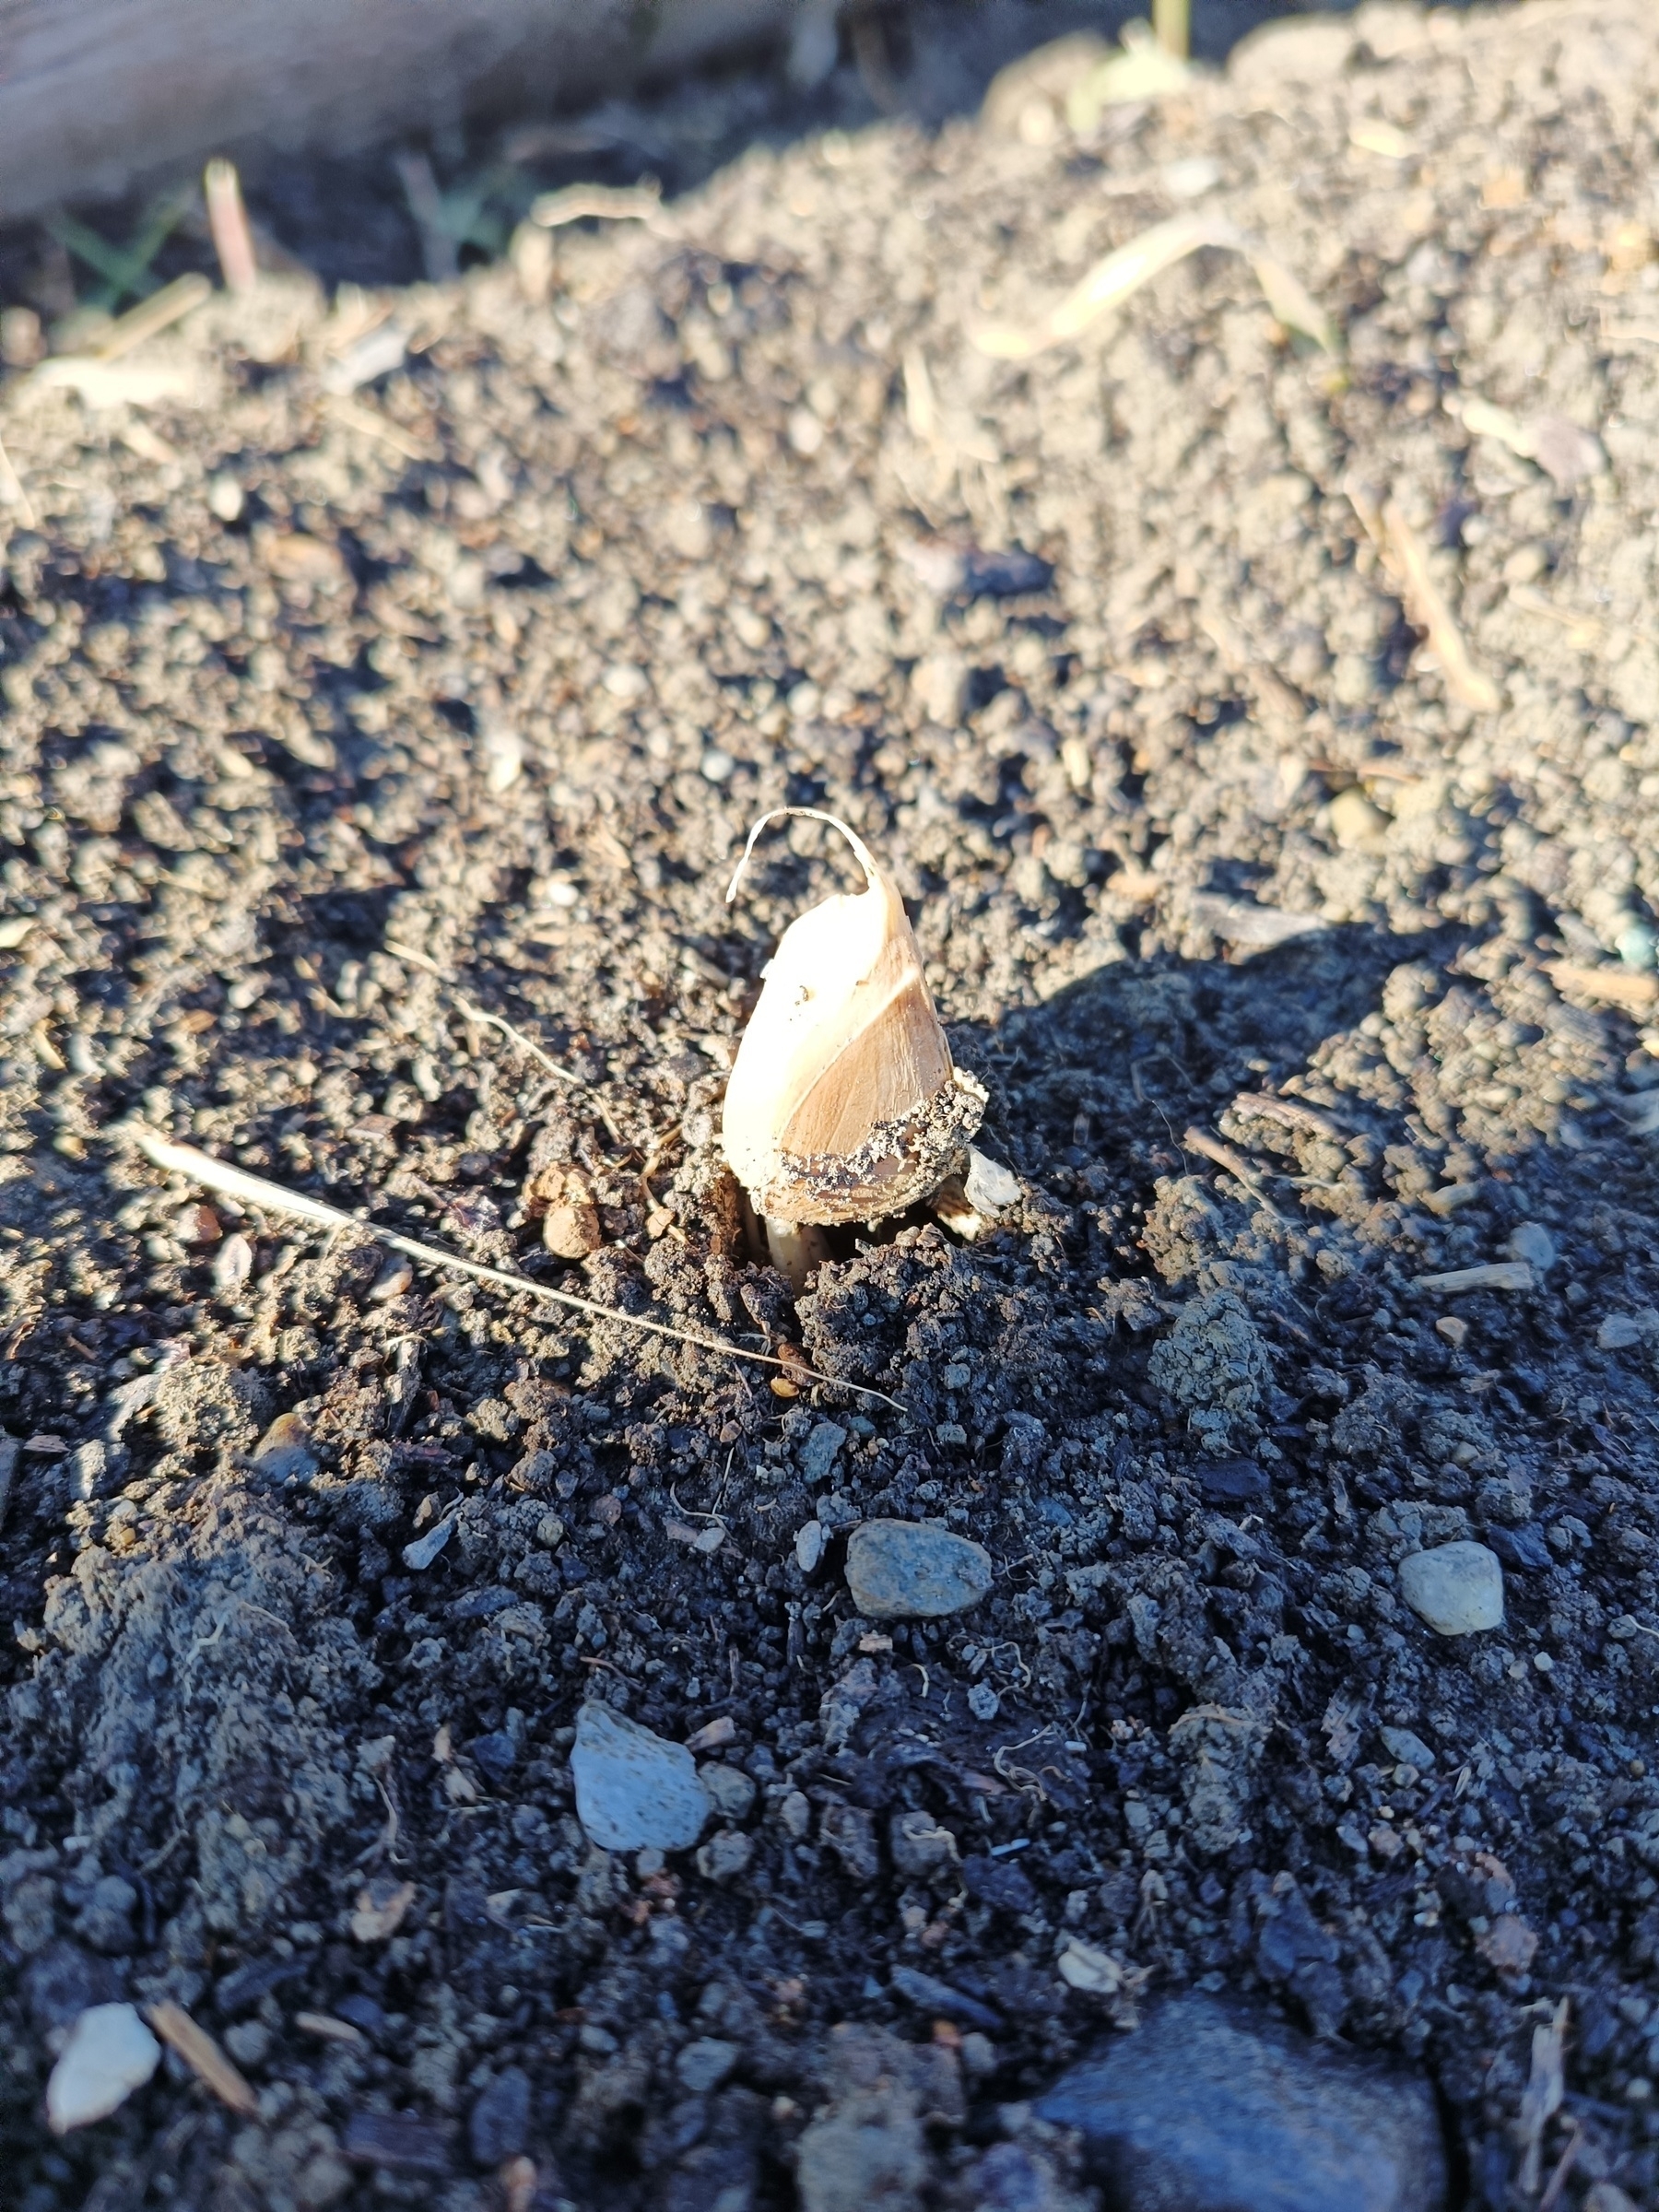 Garlic clove protruding from soil